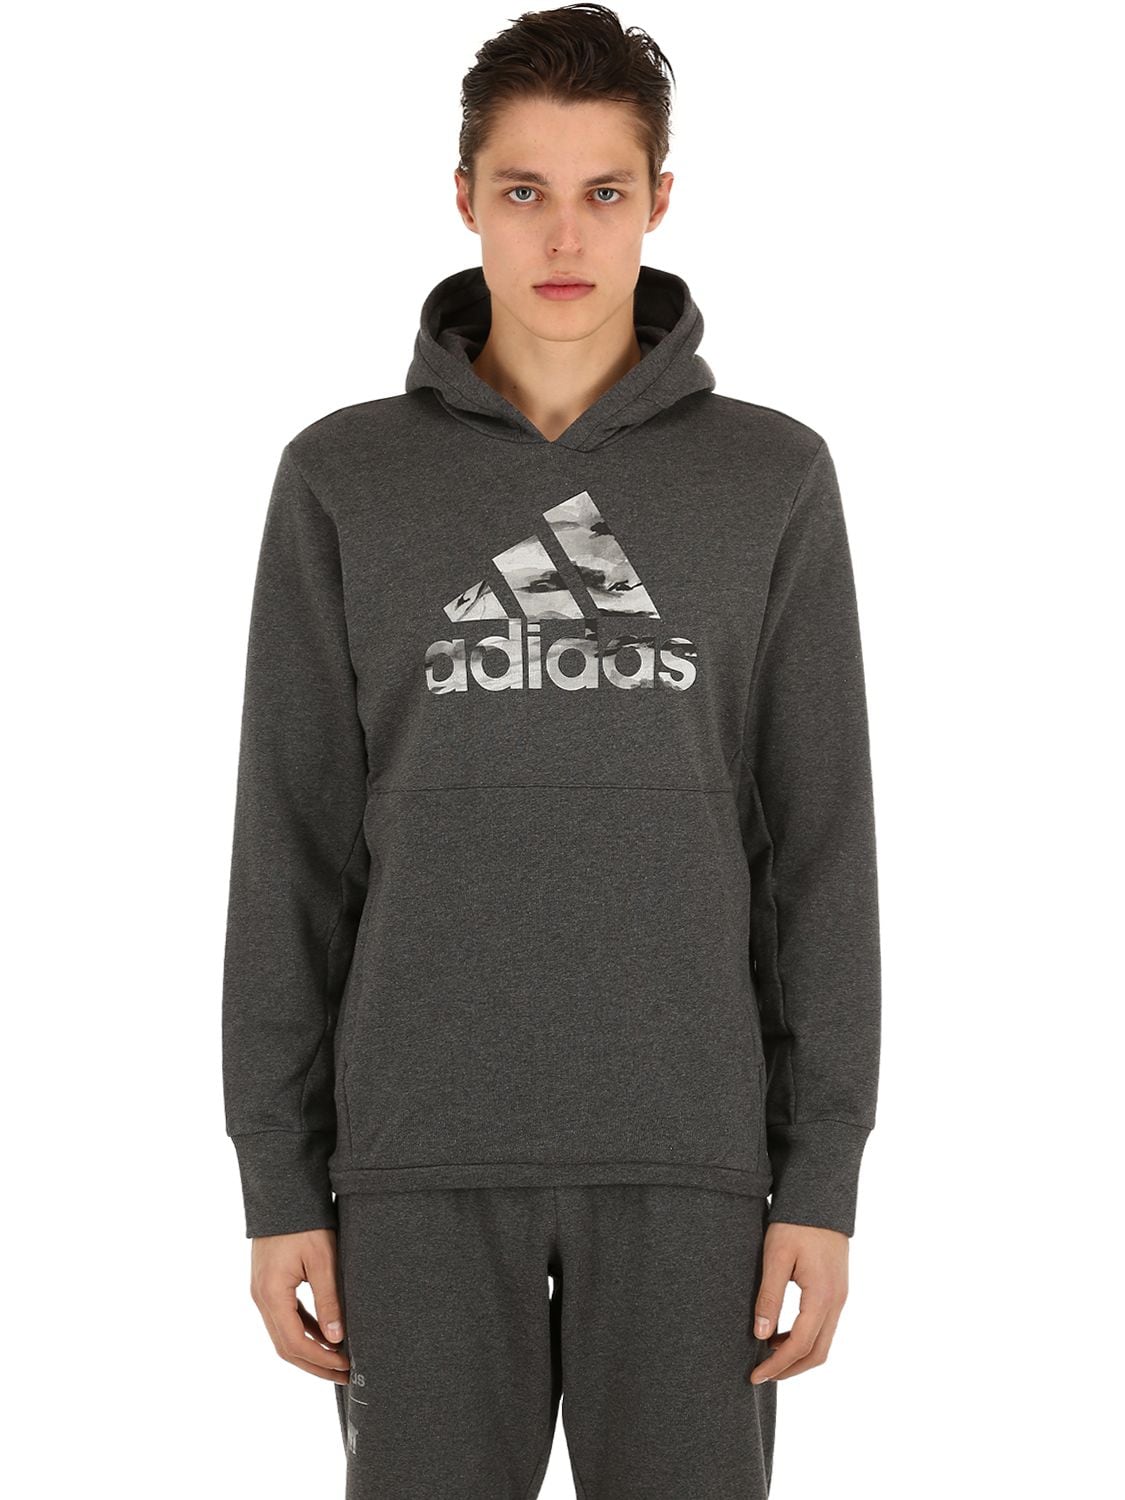 Adidas X Undefeated Undefeated Tech Sweatshirt Hoodie In Dark Grey